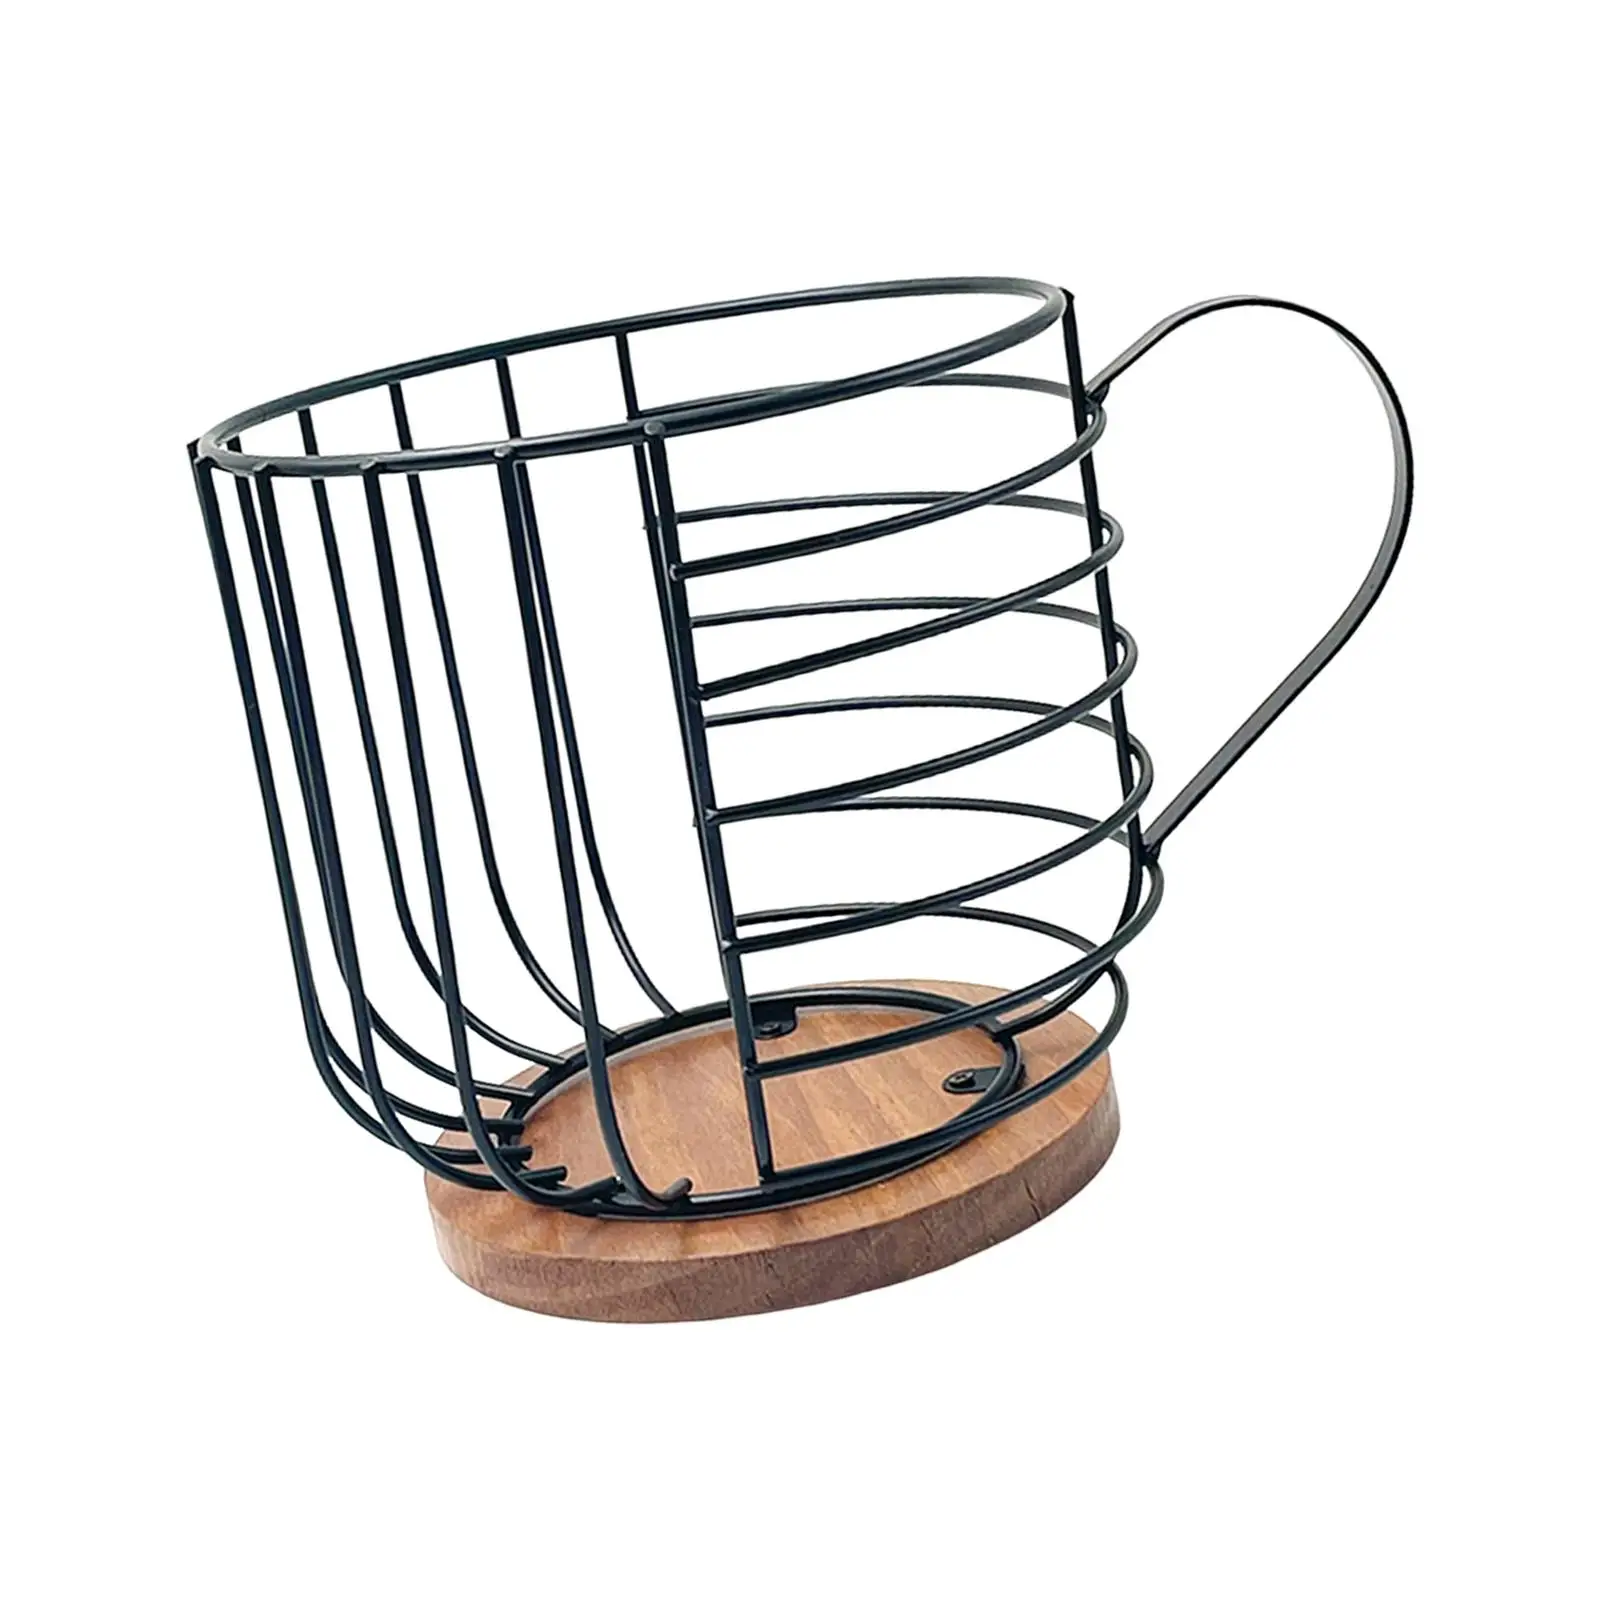 Coffee Pod Holder, Coffee Pod Basket Organizer, Coffee Pod Container, Storage